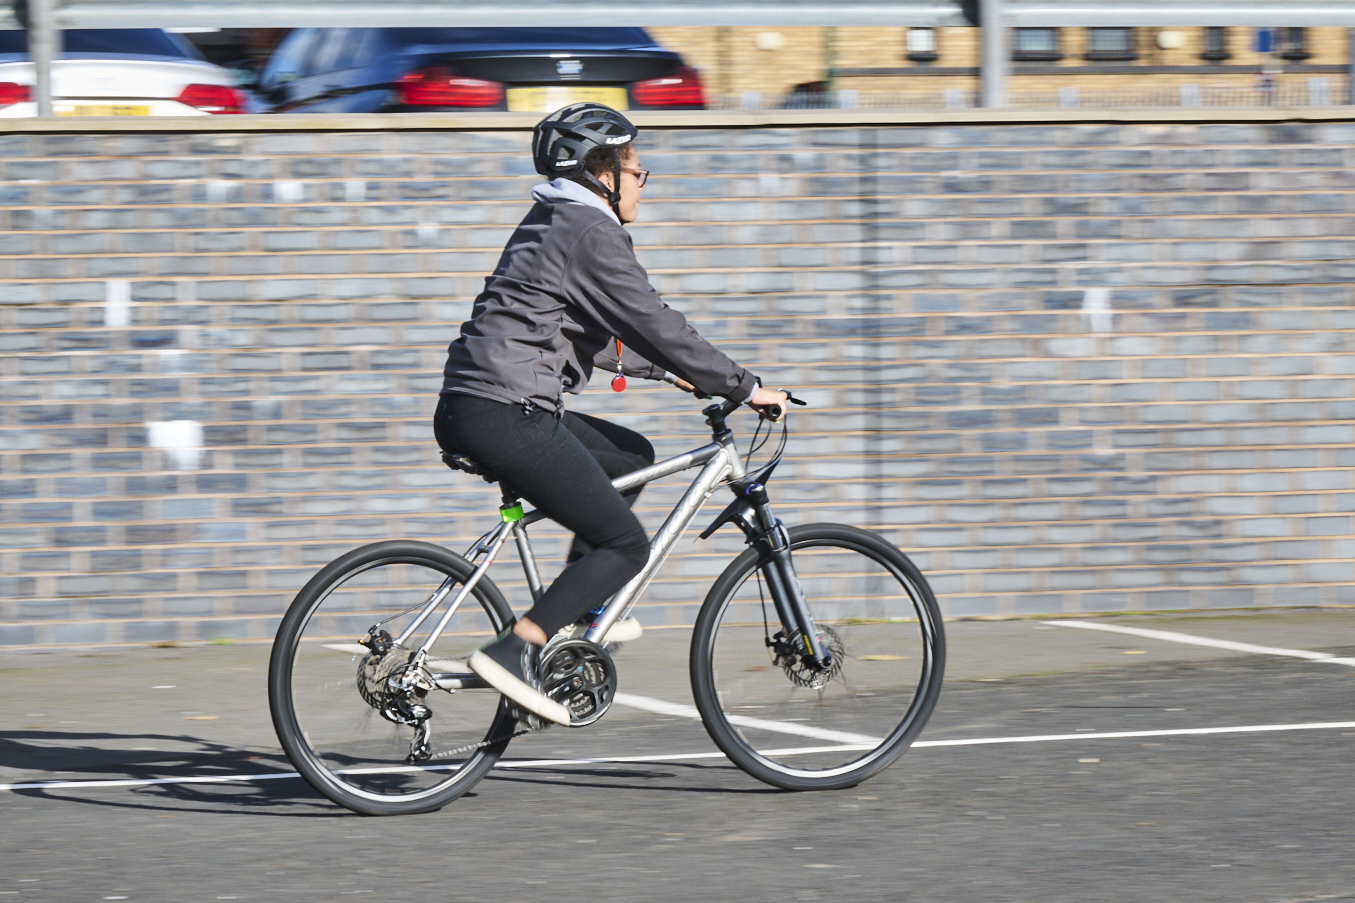 A woman rides on a bike wearing a helmet